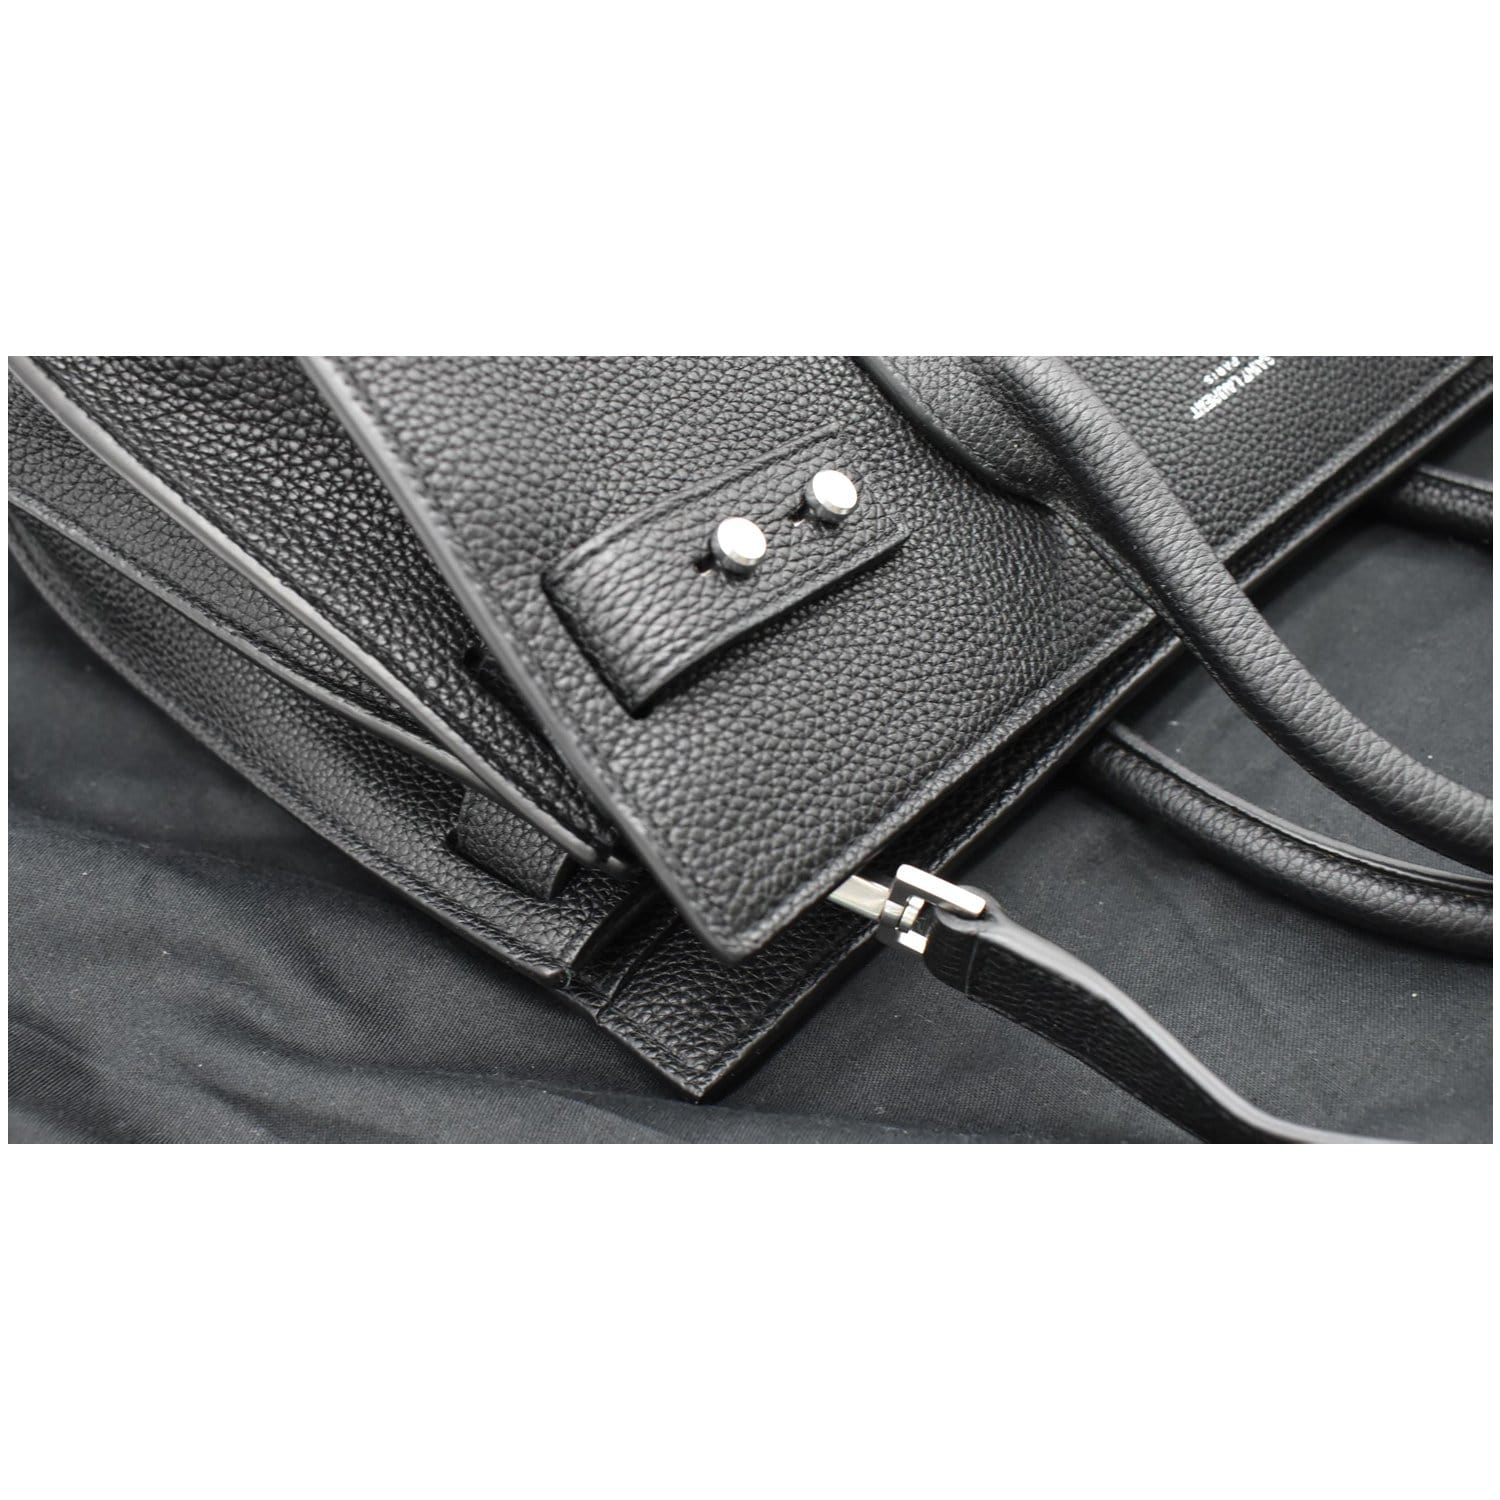 Saint Laurent Sac de Jour Backpack in Grained Leather - Black